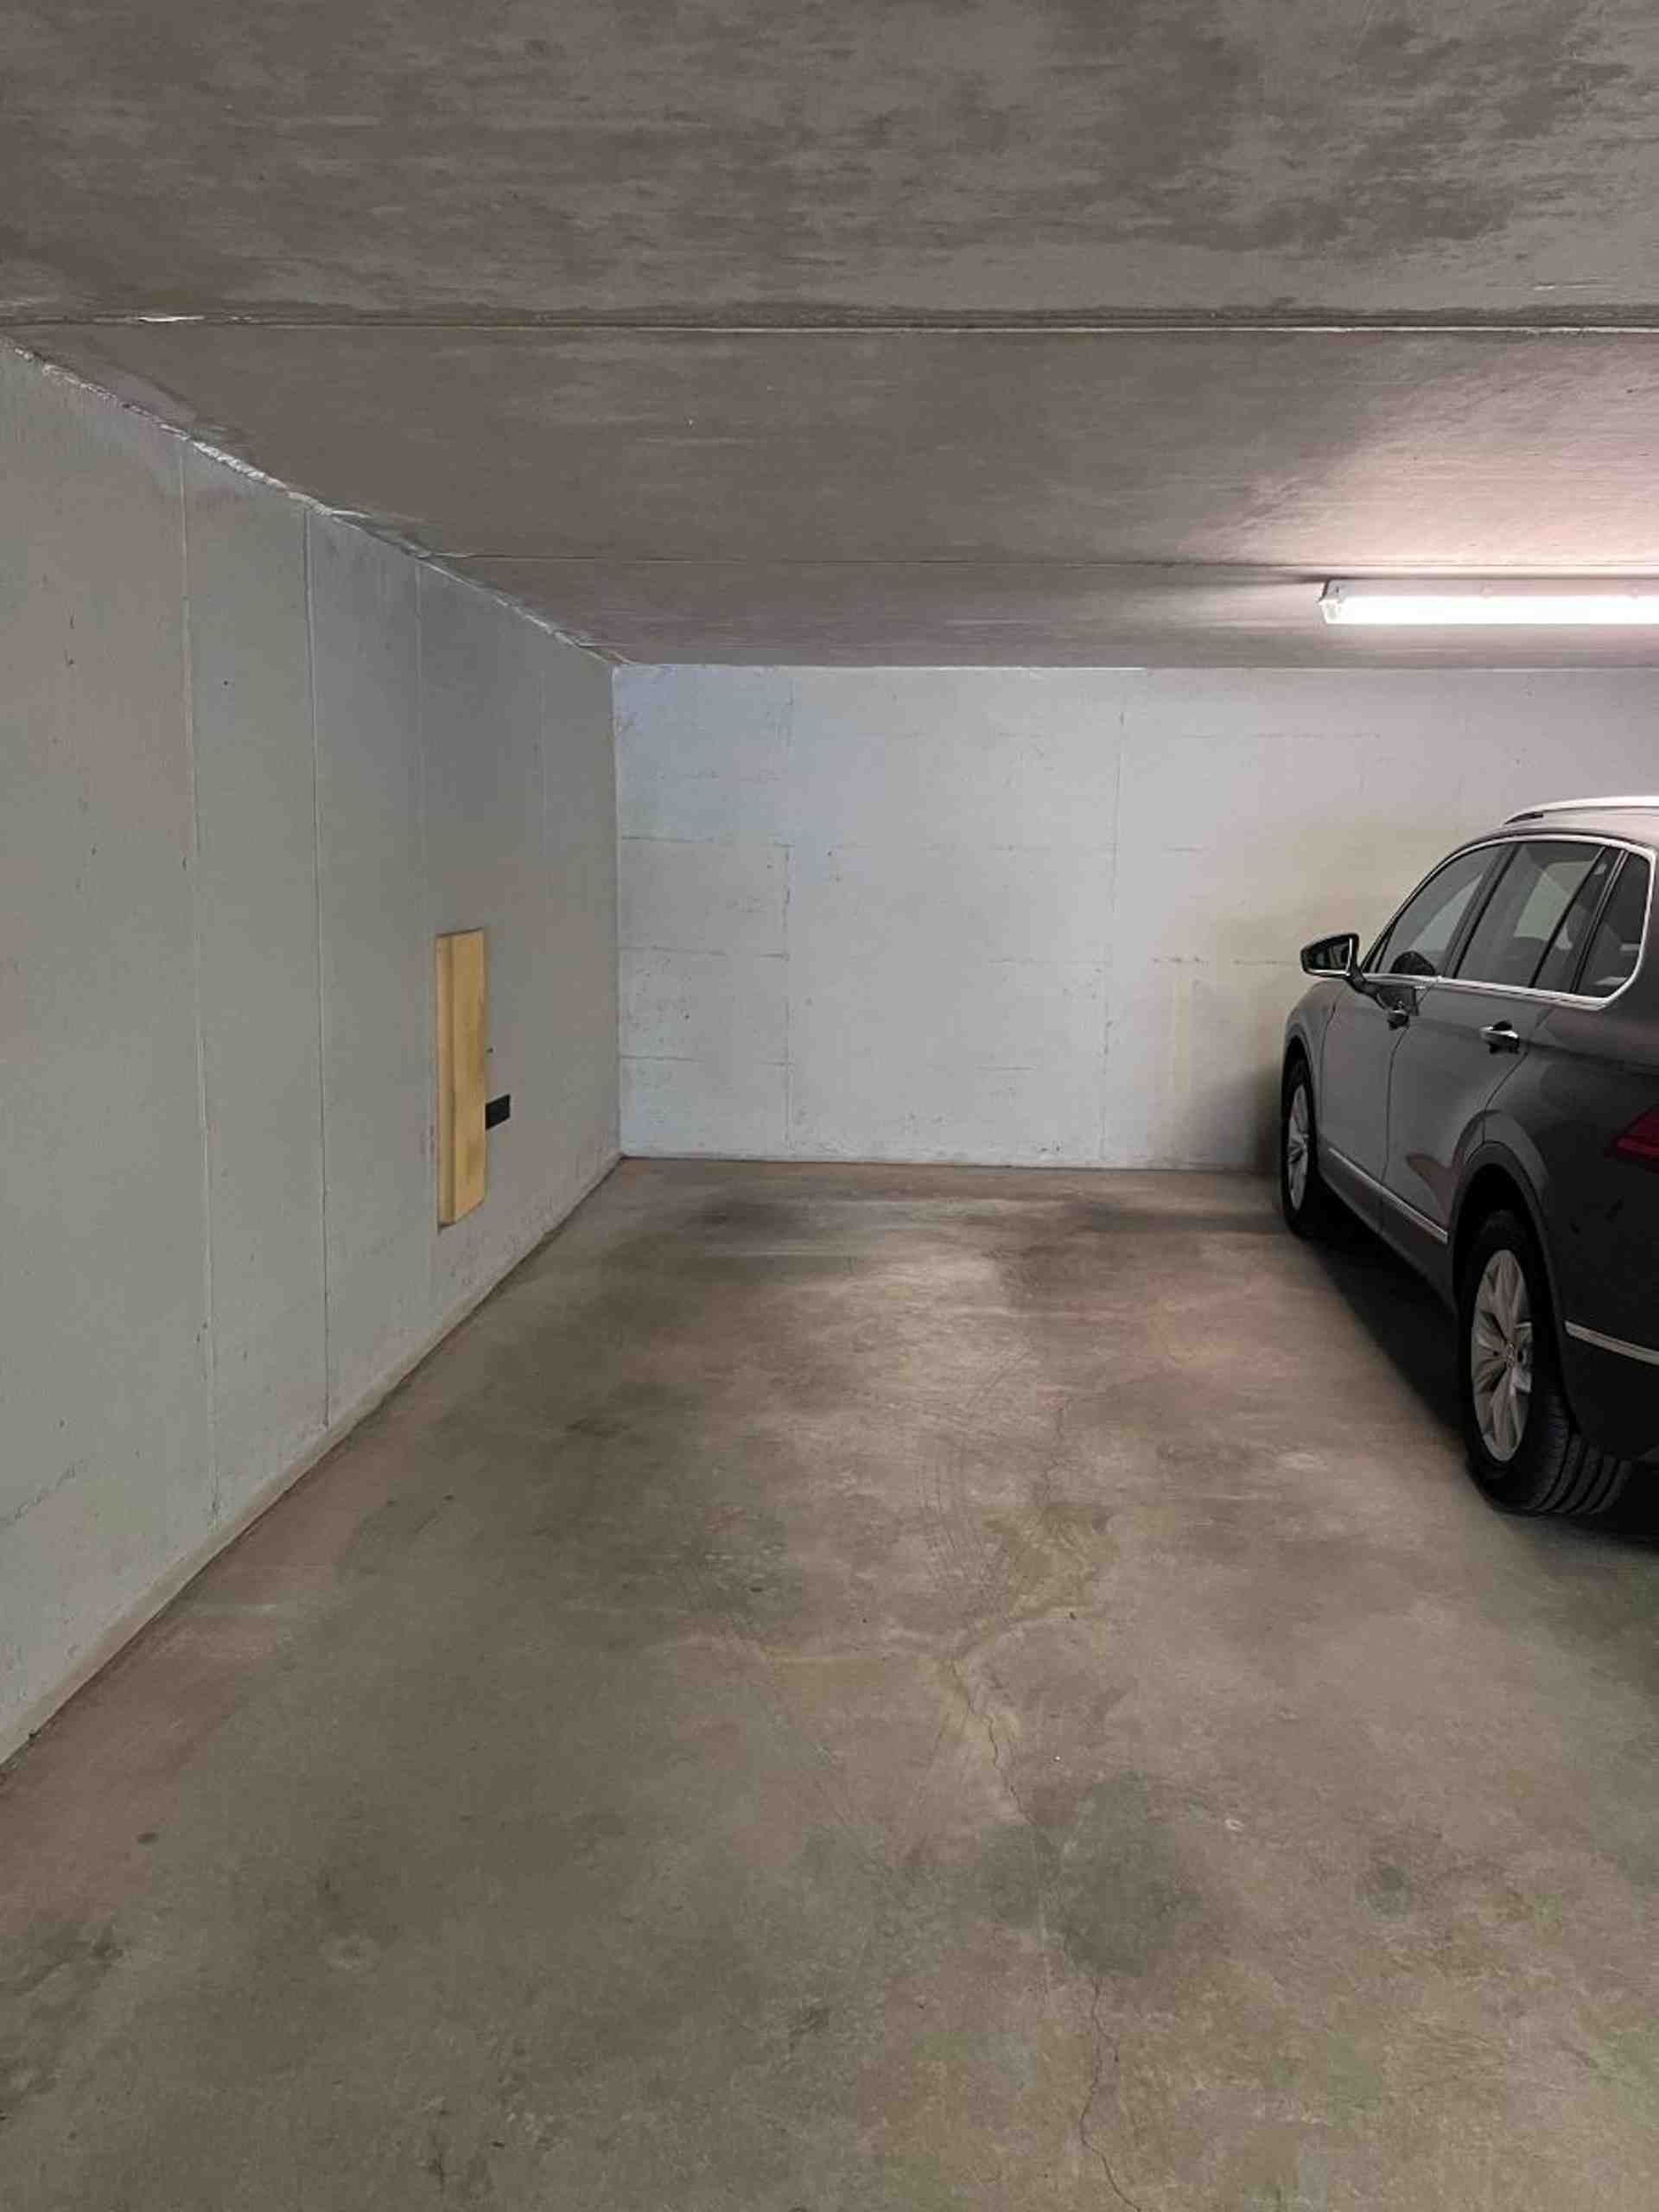 Car Parking Space - Turiner Straße, 60598 Frankfurt nad Mohanom - Fotka 1 z 3